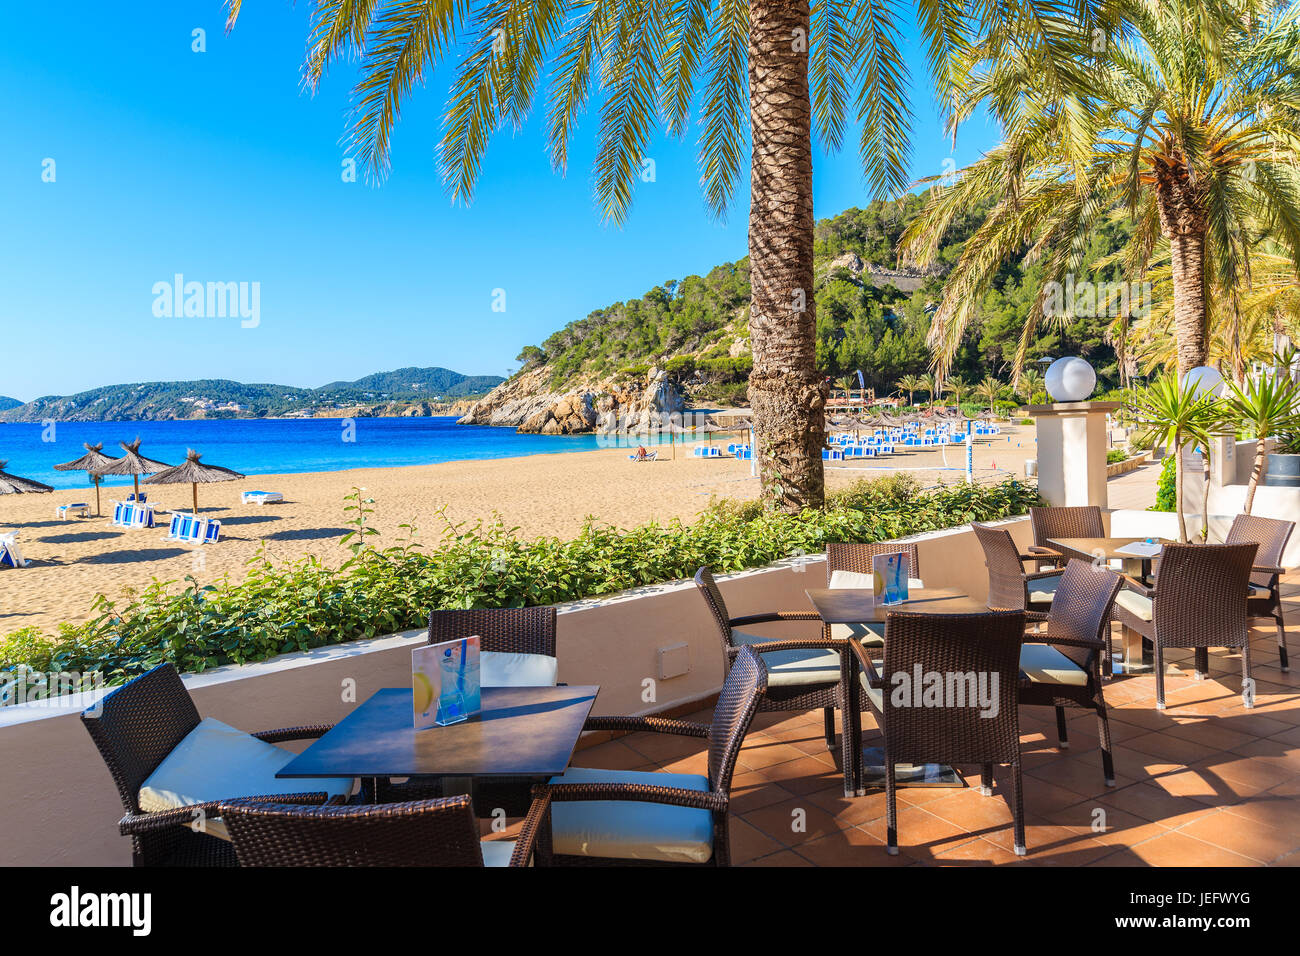 CALA SAN VICENTE BAY, IBIZA ISLAND - MAY 19, 2017: Hotel bar tables on beach with palm trees in Cala San Vicente bay, Ibiza island, Spain. Stock Photo